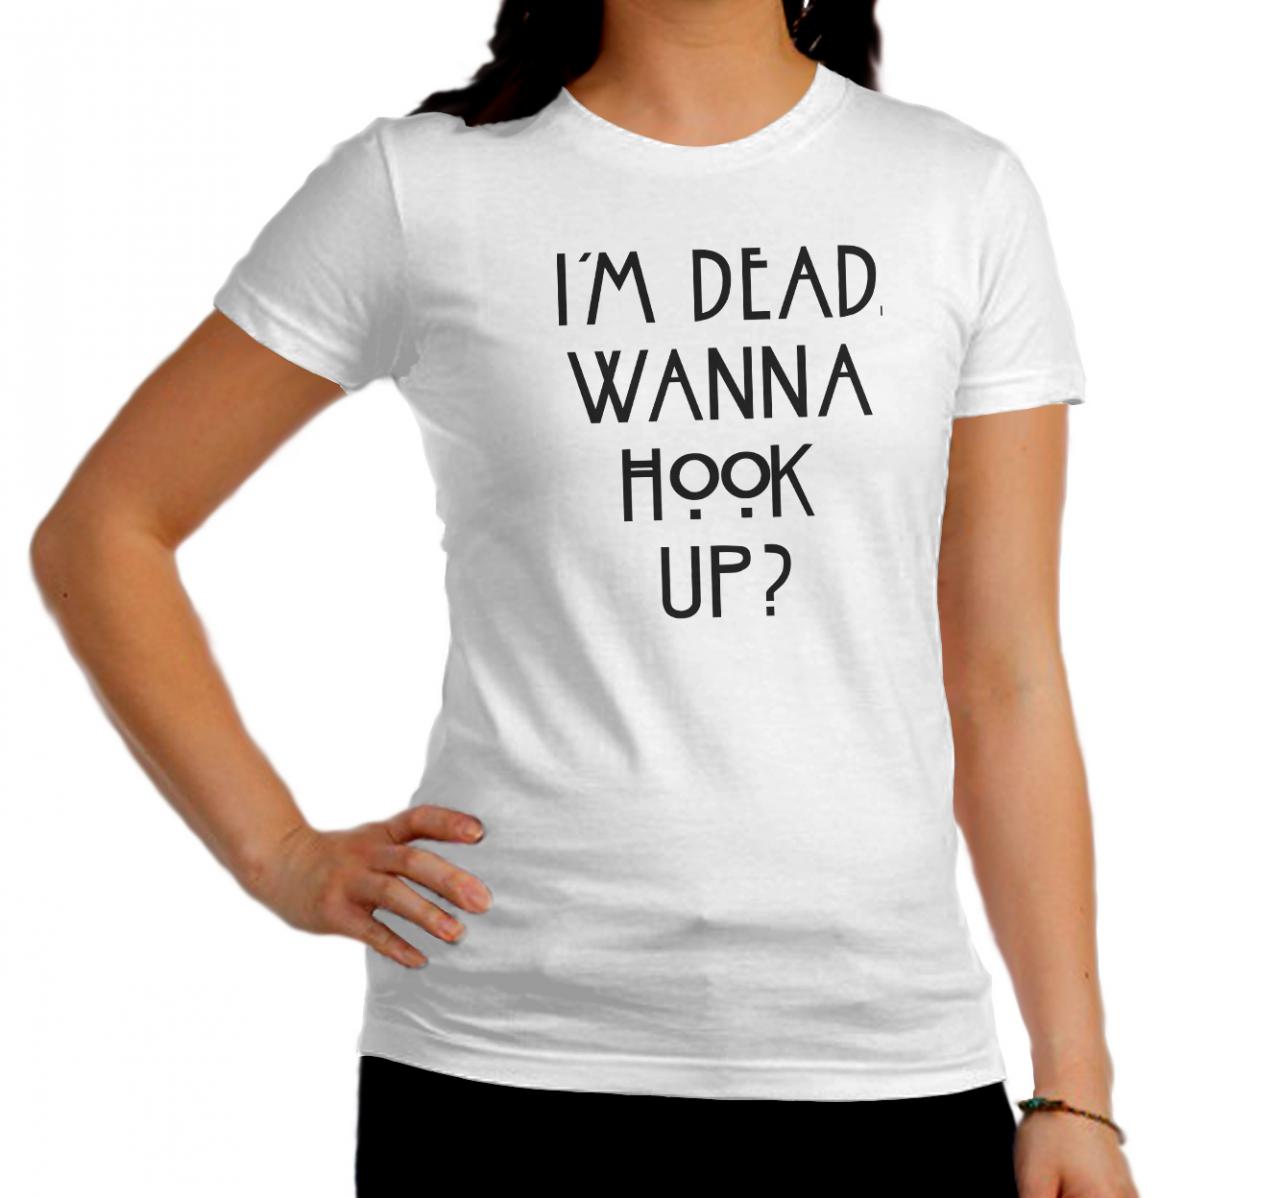 I'm Dead Wanna Hook Up Shirt Funny Words Women T-shirt I'm Dead Wanna Hook Up Funny Tees White Black Xs S M L Xl We Heart It